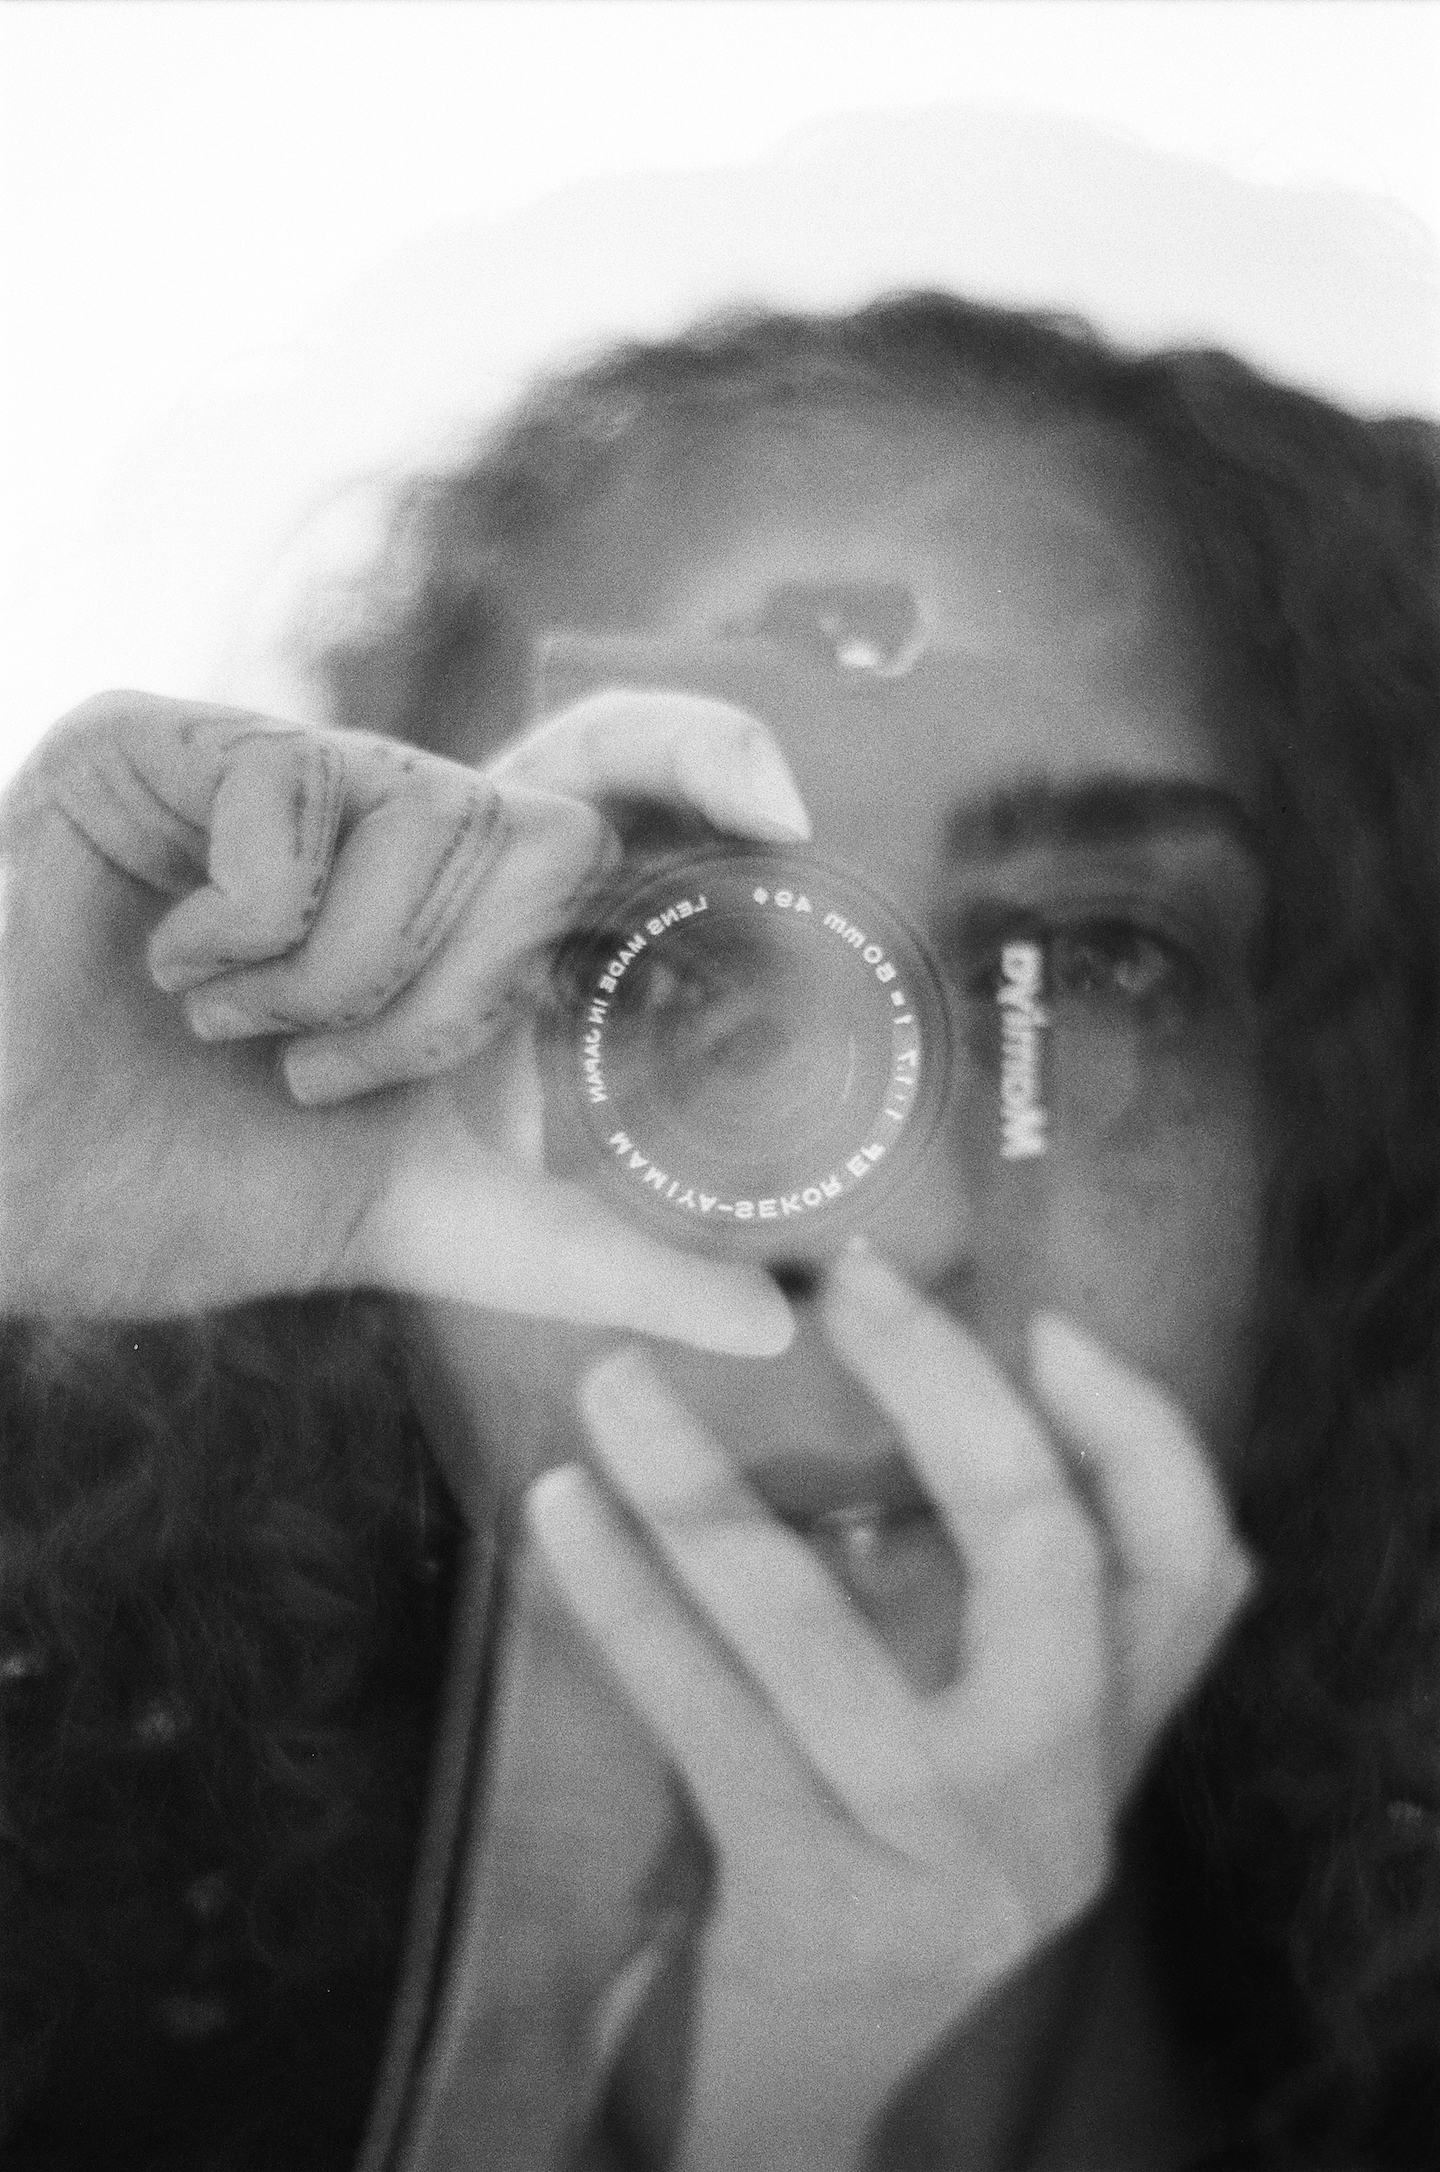 Self portrait with my camera, 2021, Iilford HP5 35mm B&W film